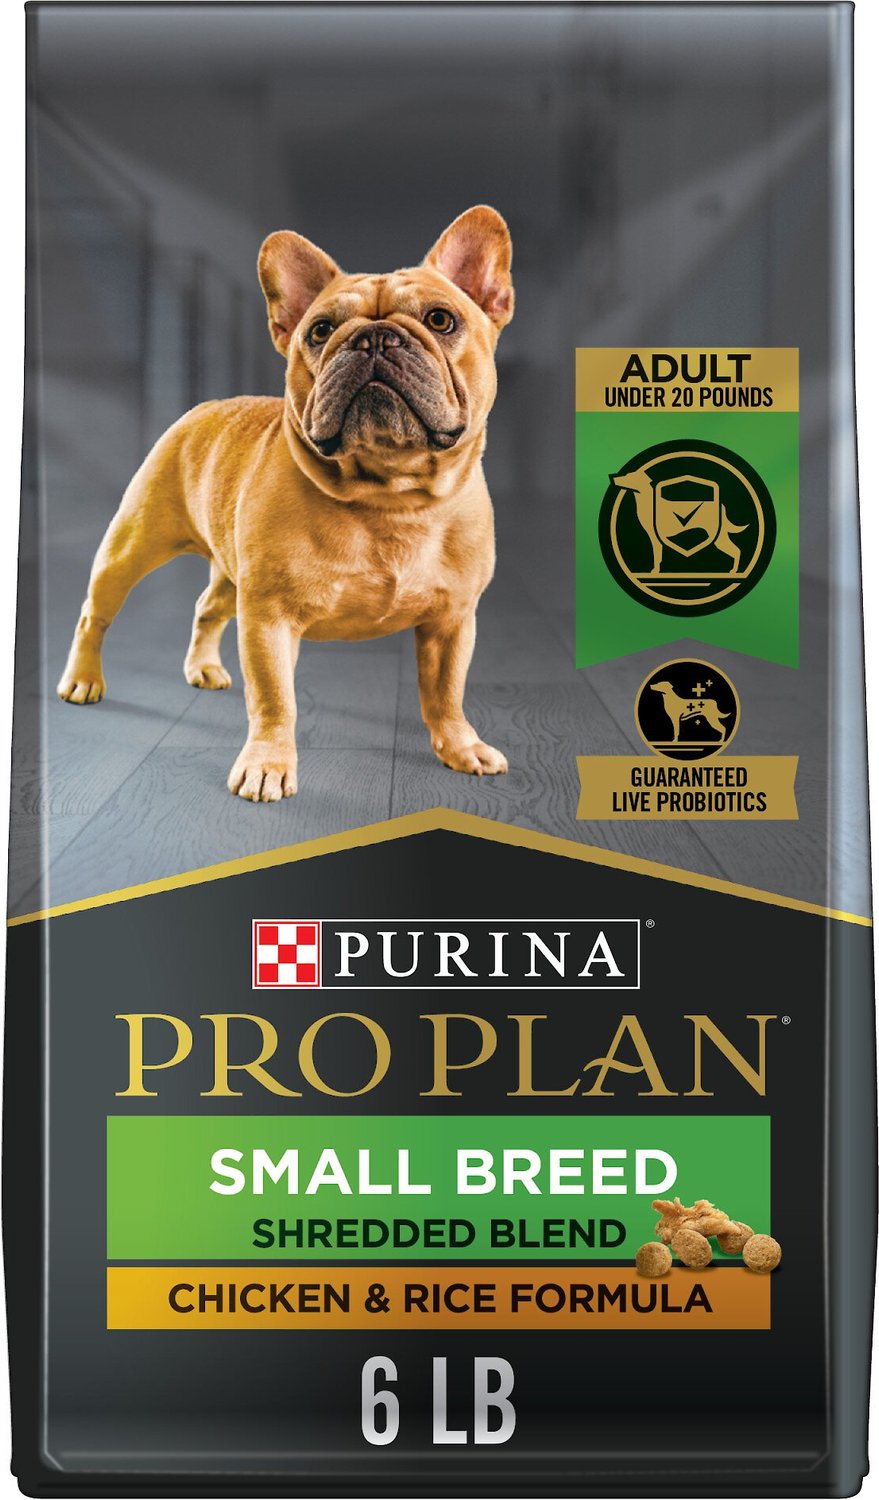 Purina Pro Plan Small Breed Shredded Formula Adult Dry Dog Food